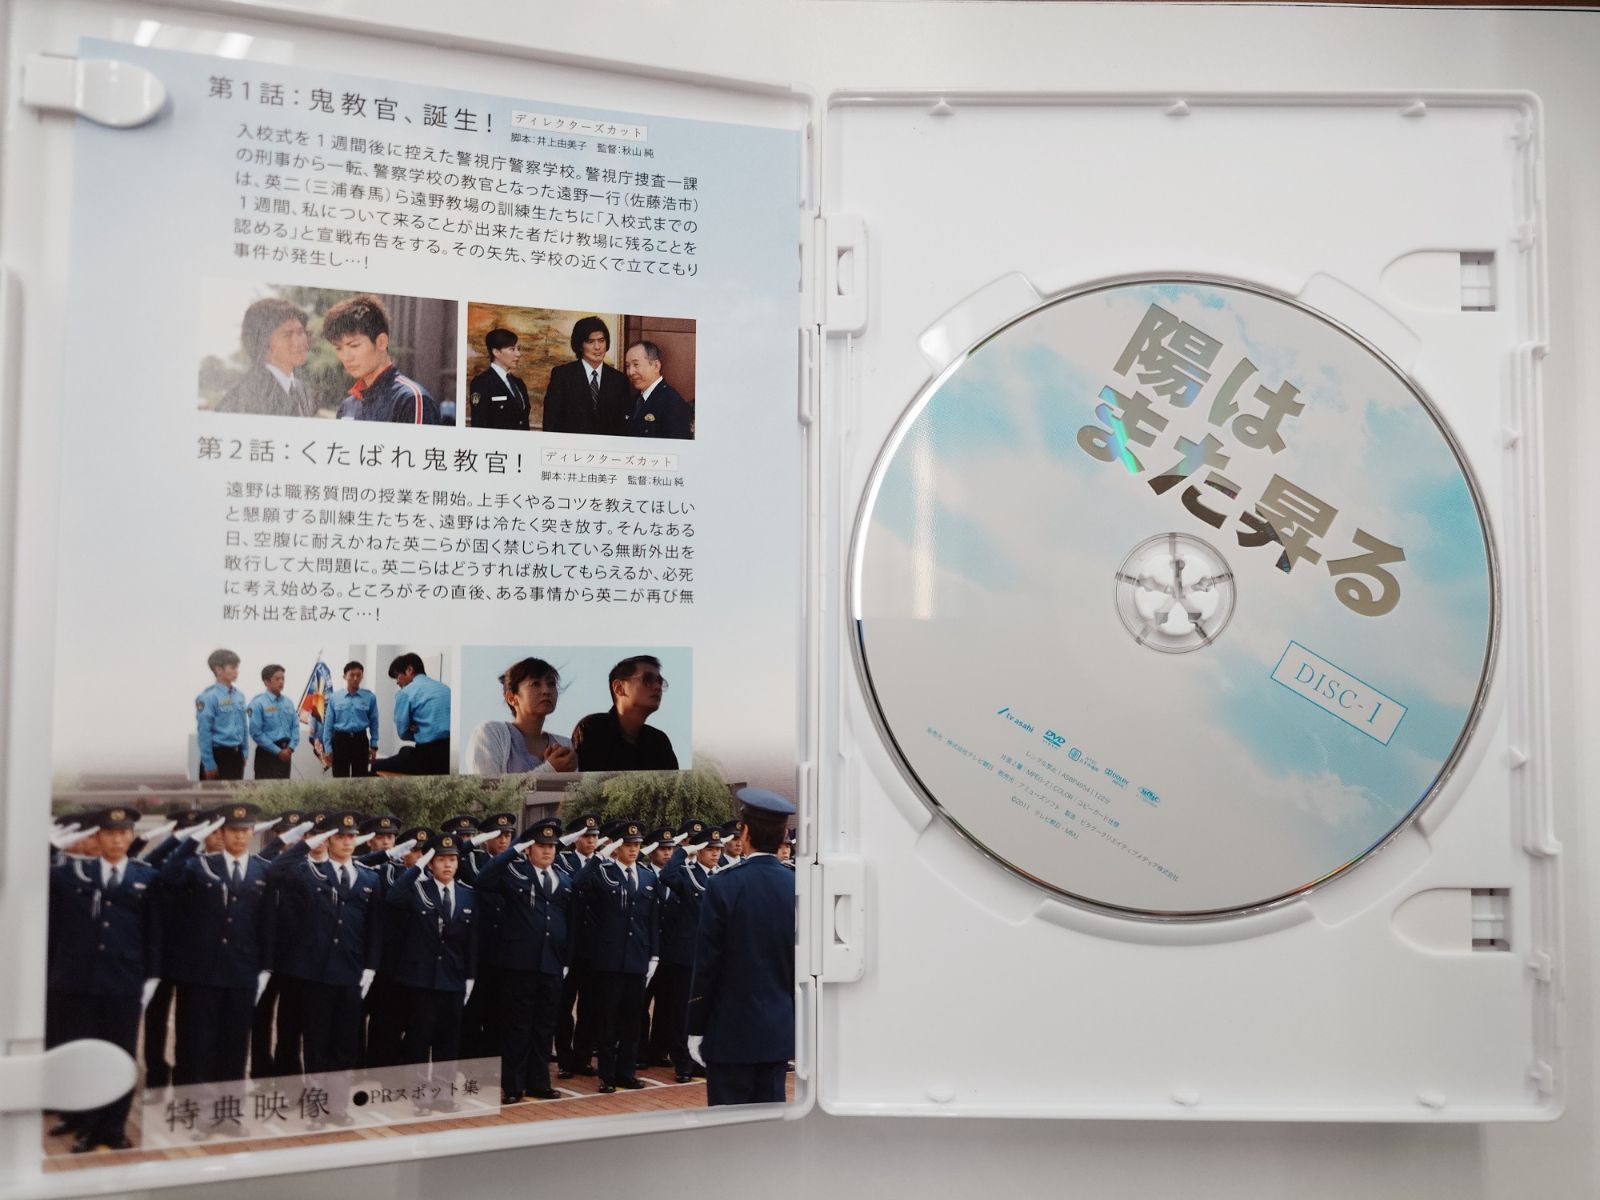 ◎DVD　TVドラマ　陽はまた昇る　DVD-BOX